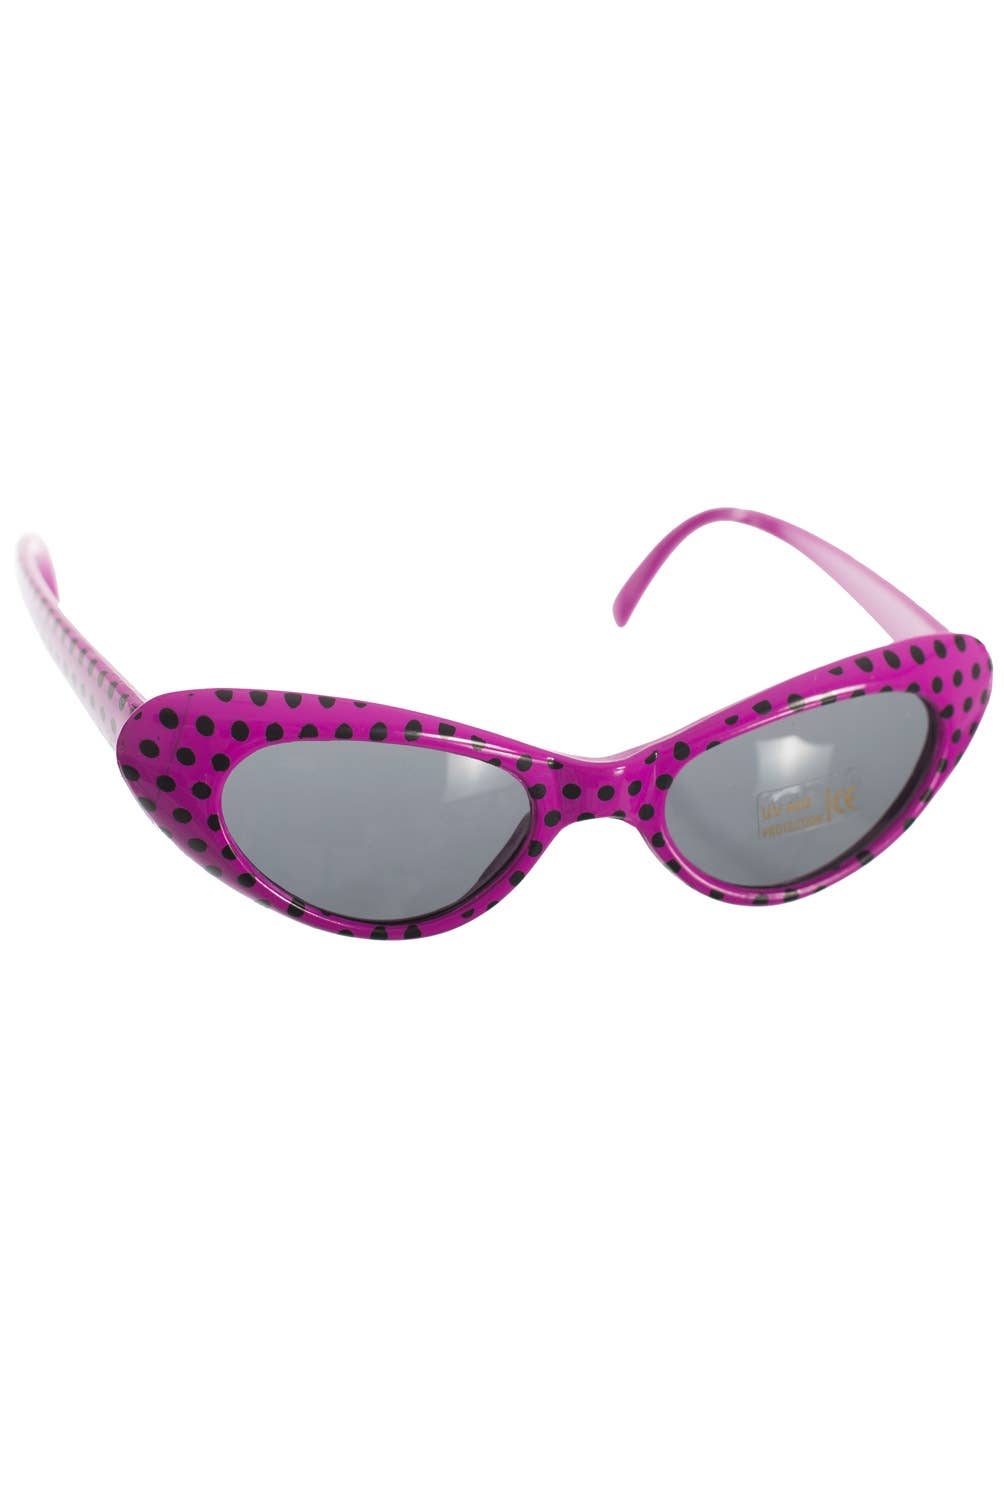 Retro Dark Pink and Black Polka Dot 50s Dress Up Costume Accessory Sunglasses - Main Image